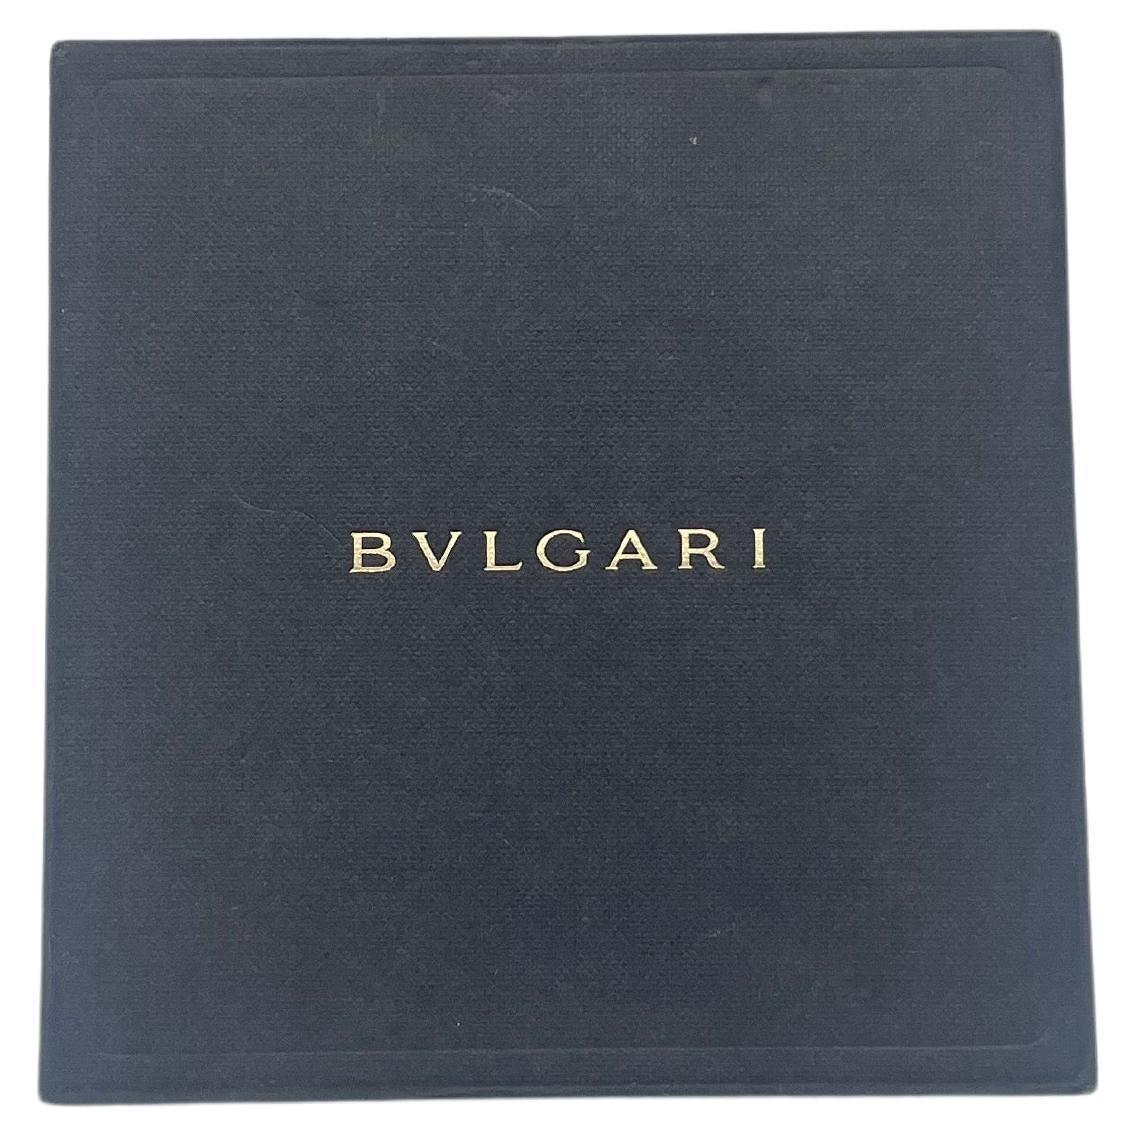 Bulgari/Bvlgari Pareutesi white gold necklace 18k  For Sale 1